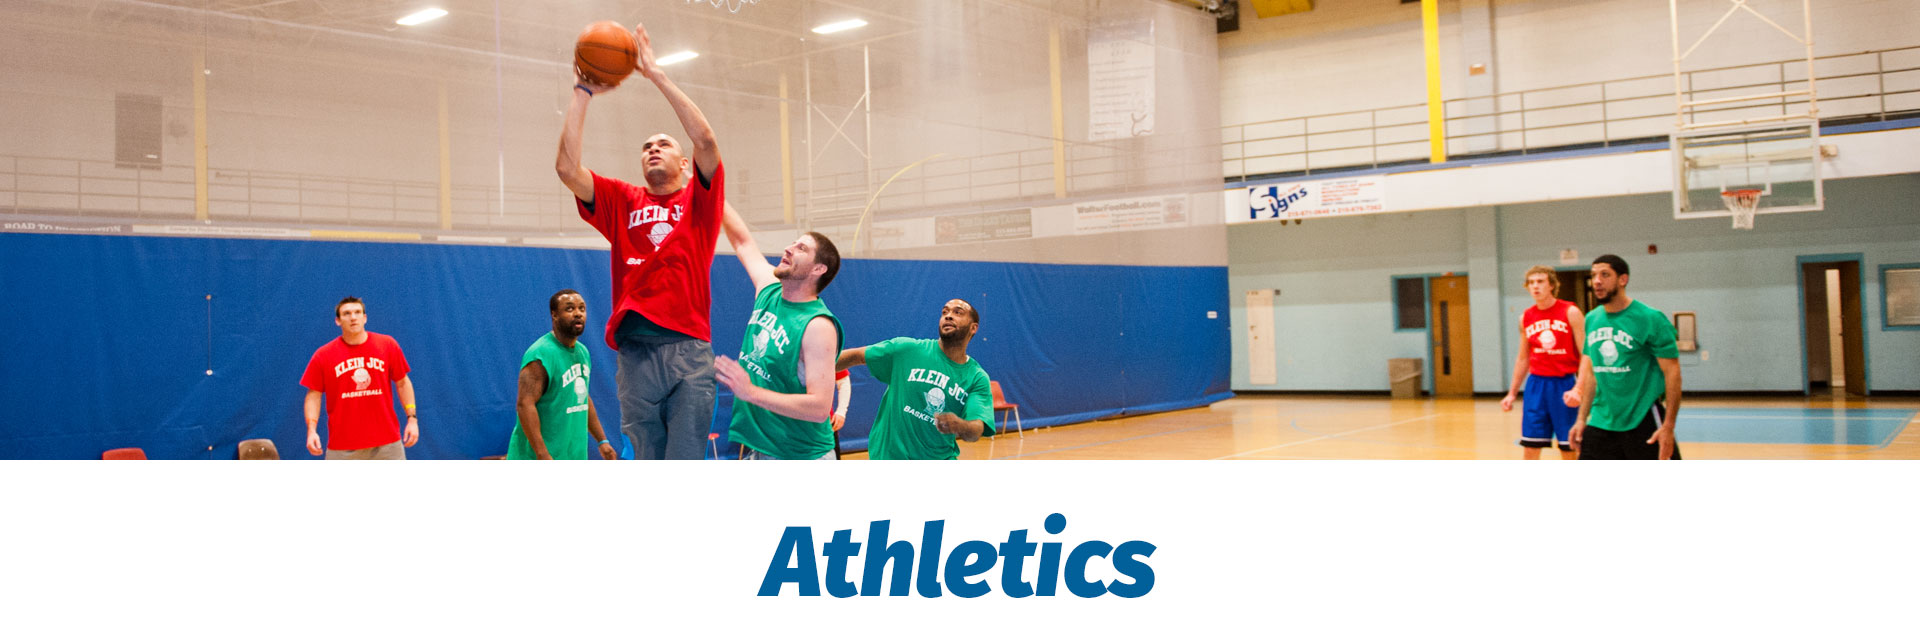 KleinLife athletics, athletics for active adults, senior athletic services Philadelphia